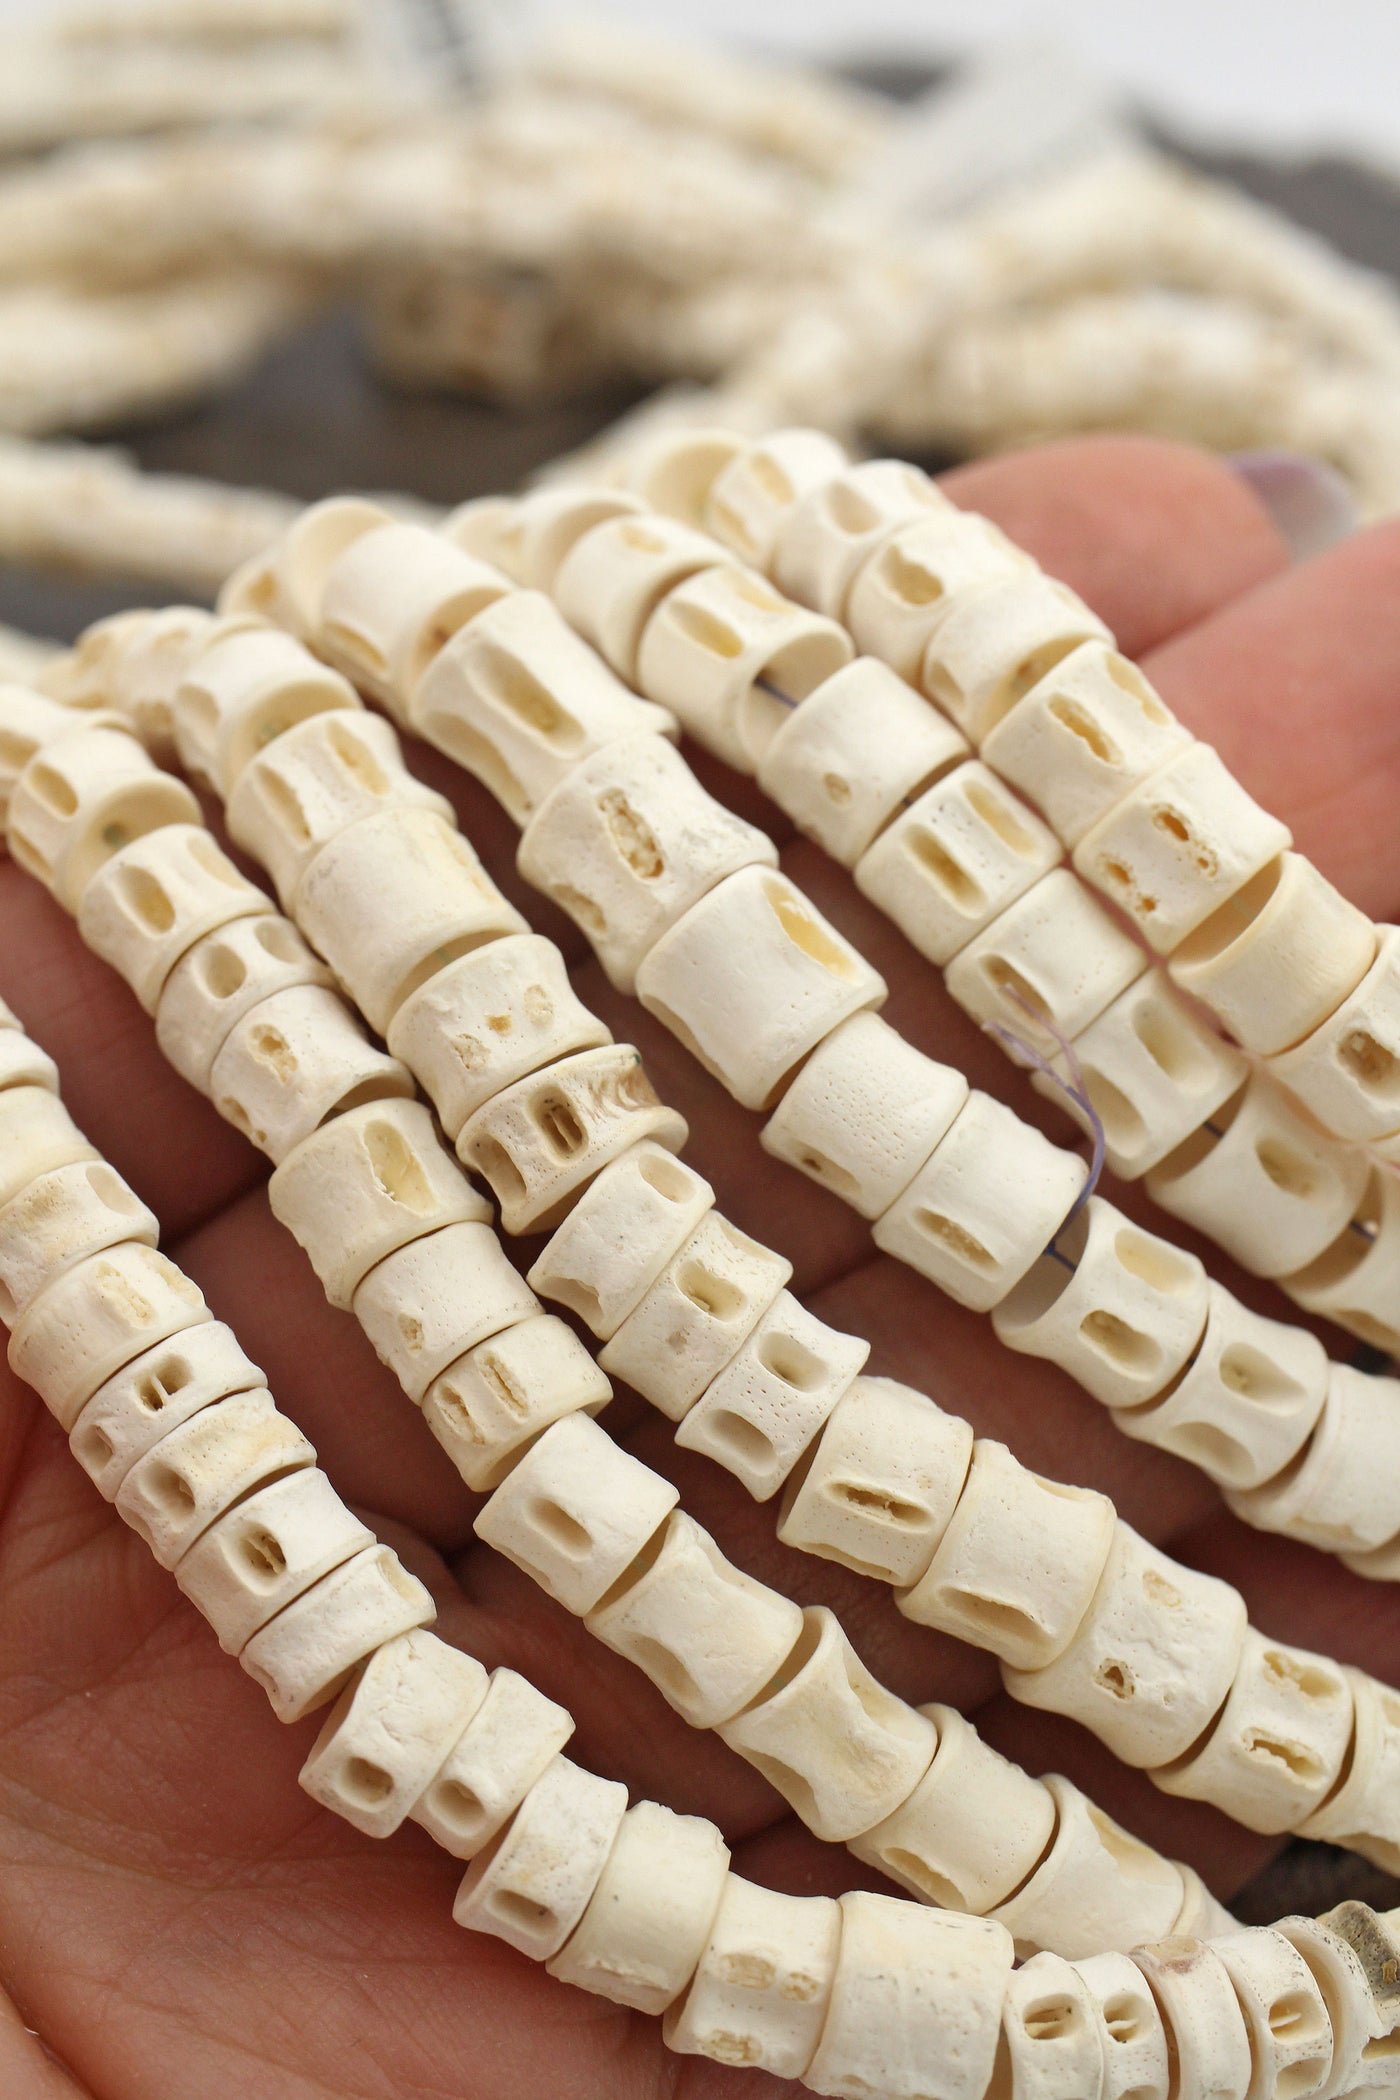 Medium Fish Vertebrae Bone Beads from Africa, 8mm, 42 Long Strand